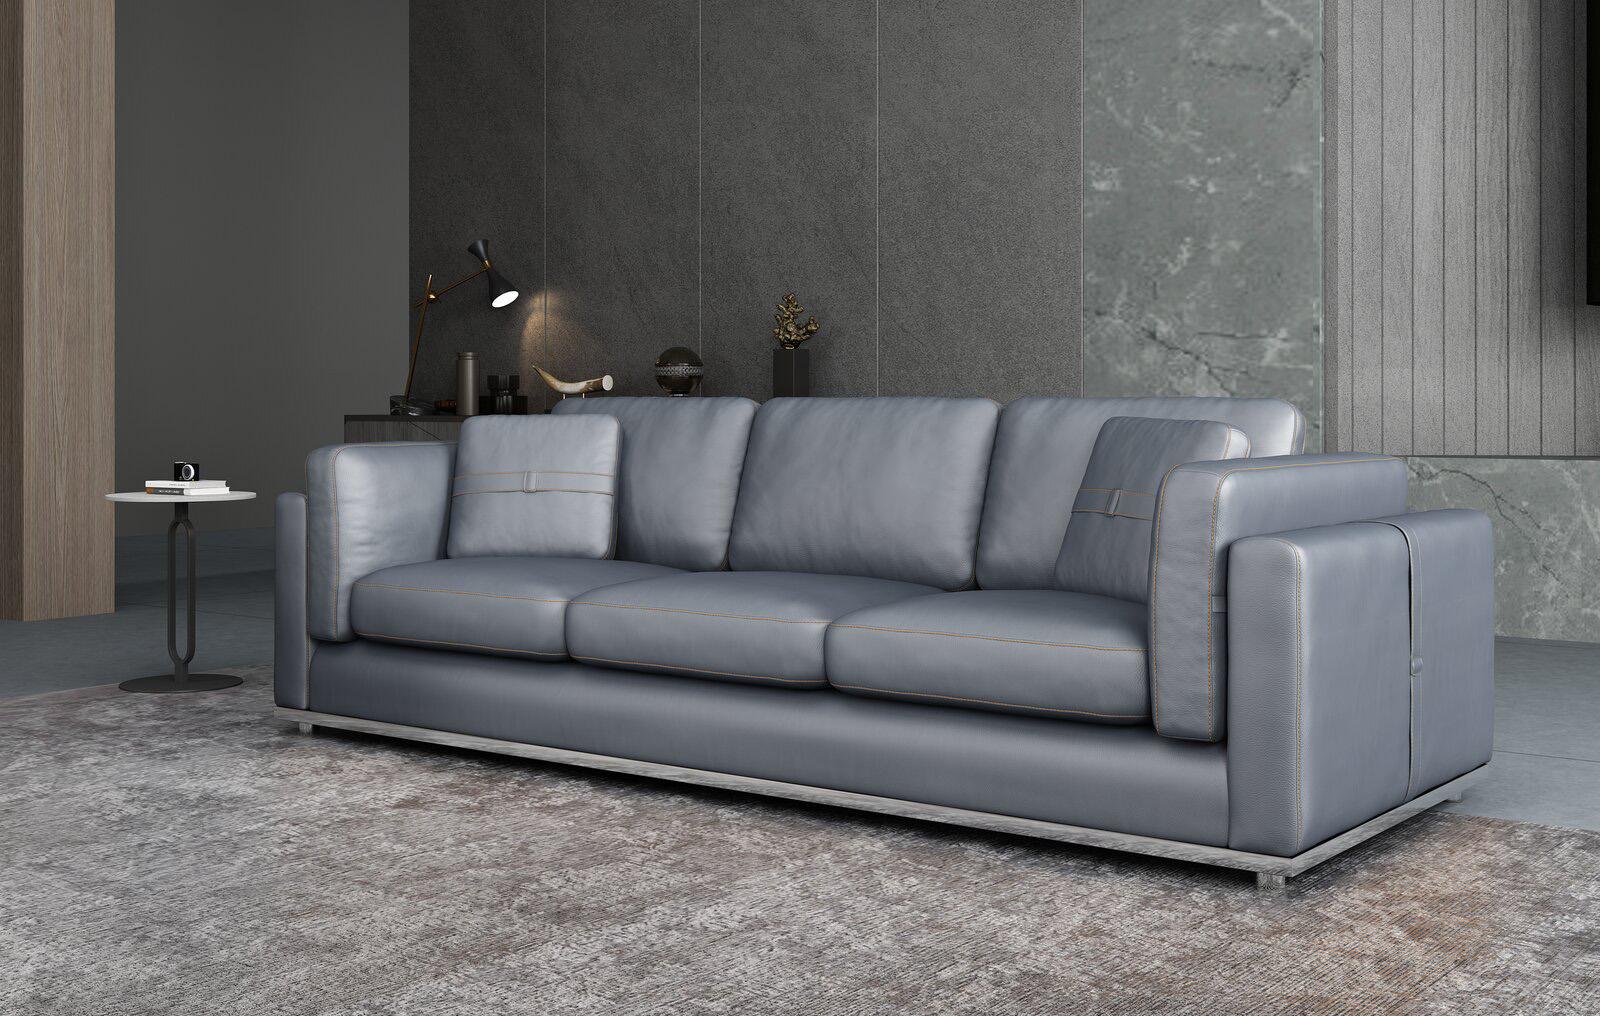 

                    
EUROPEAN FURNITURE PICASSO Sofa Set Smoke/Gray Leather Purchase 
